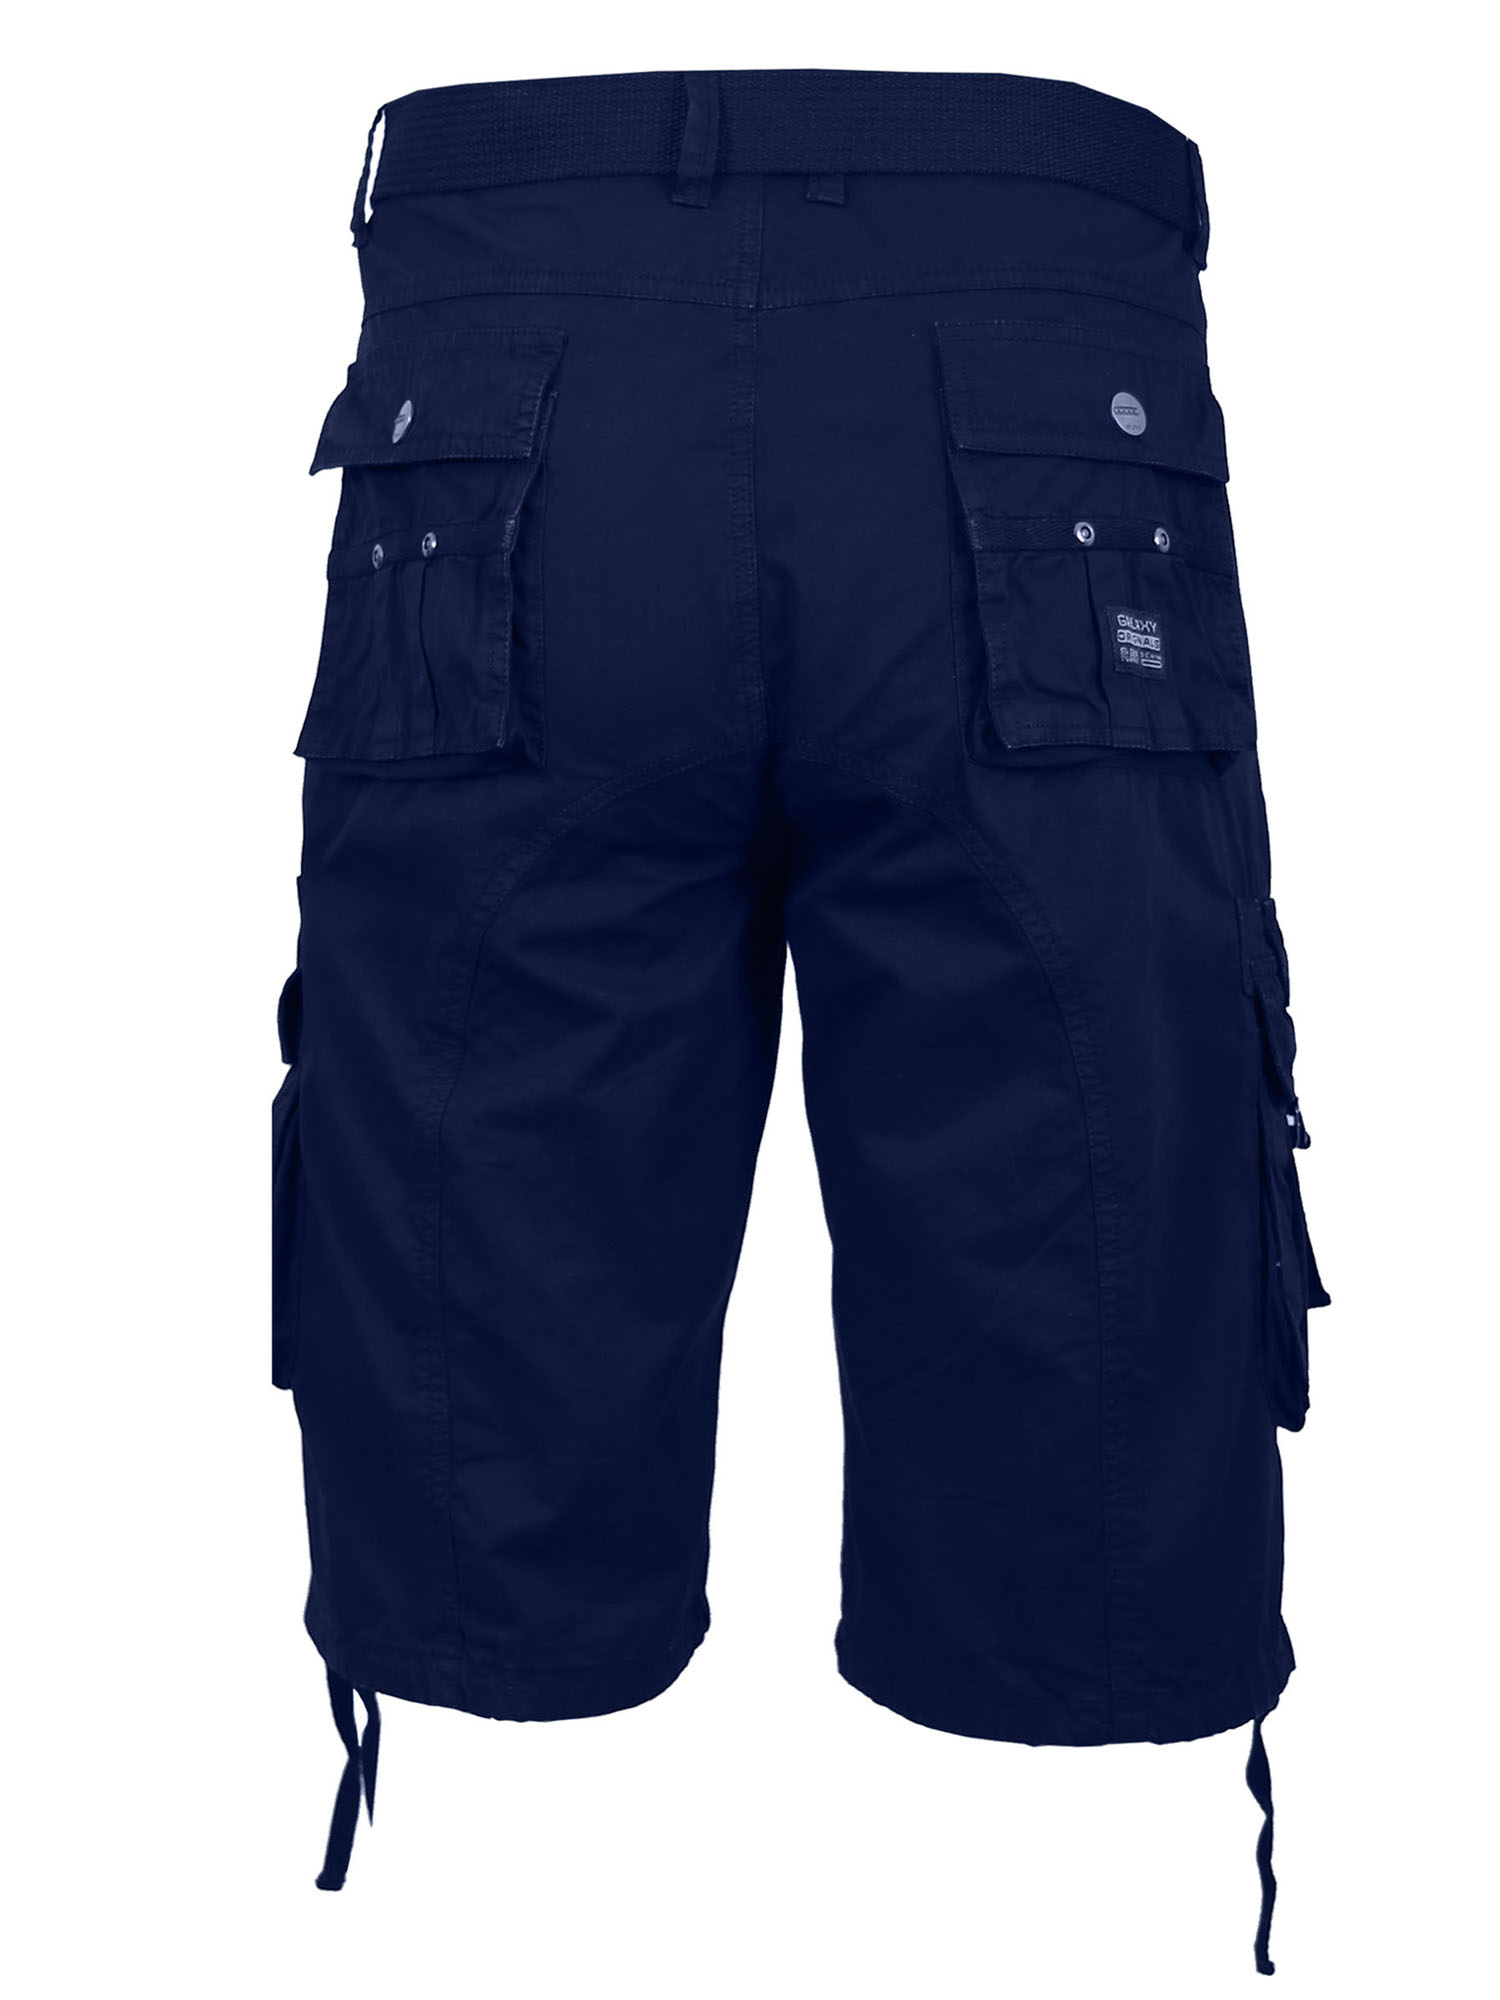 Men's Distressed Vintage Belted Cargo Utility Shorts (Size 30-48) - image 3 of 4